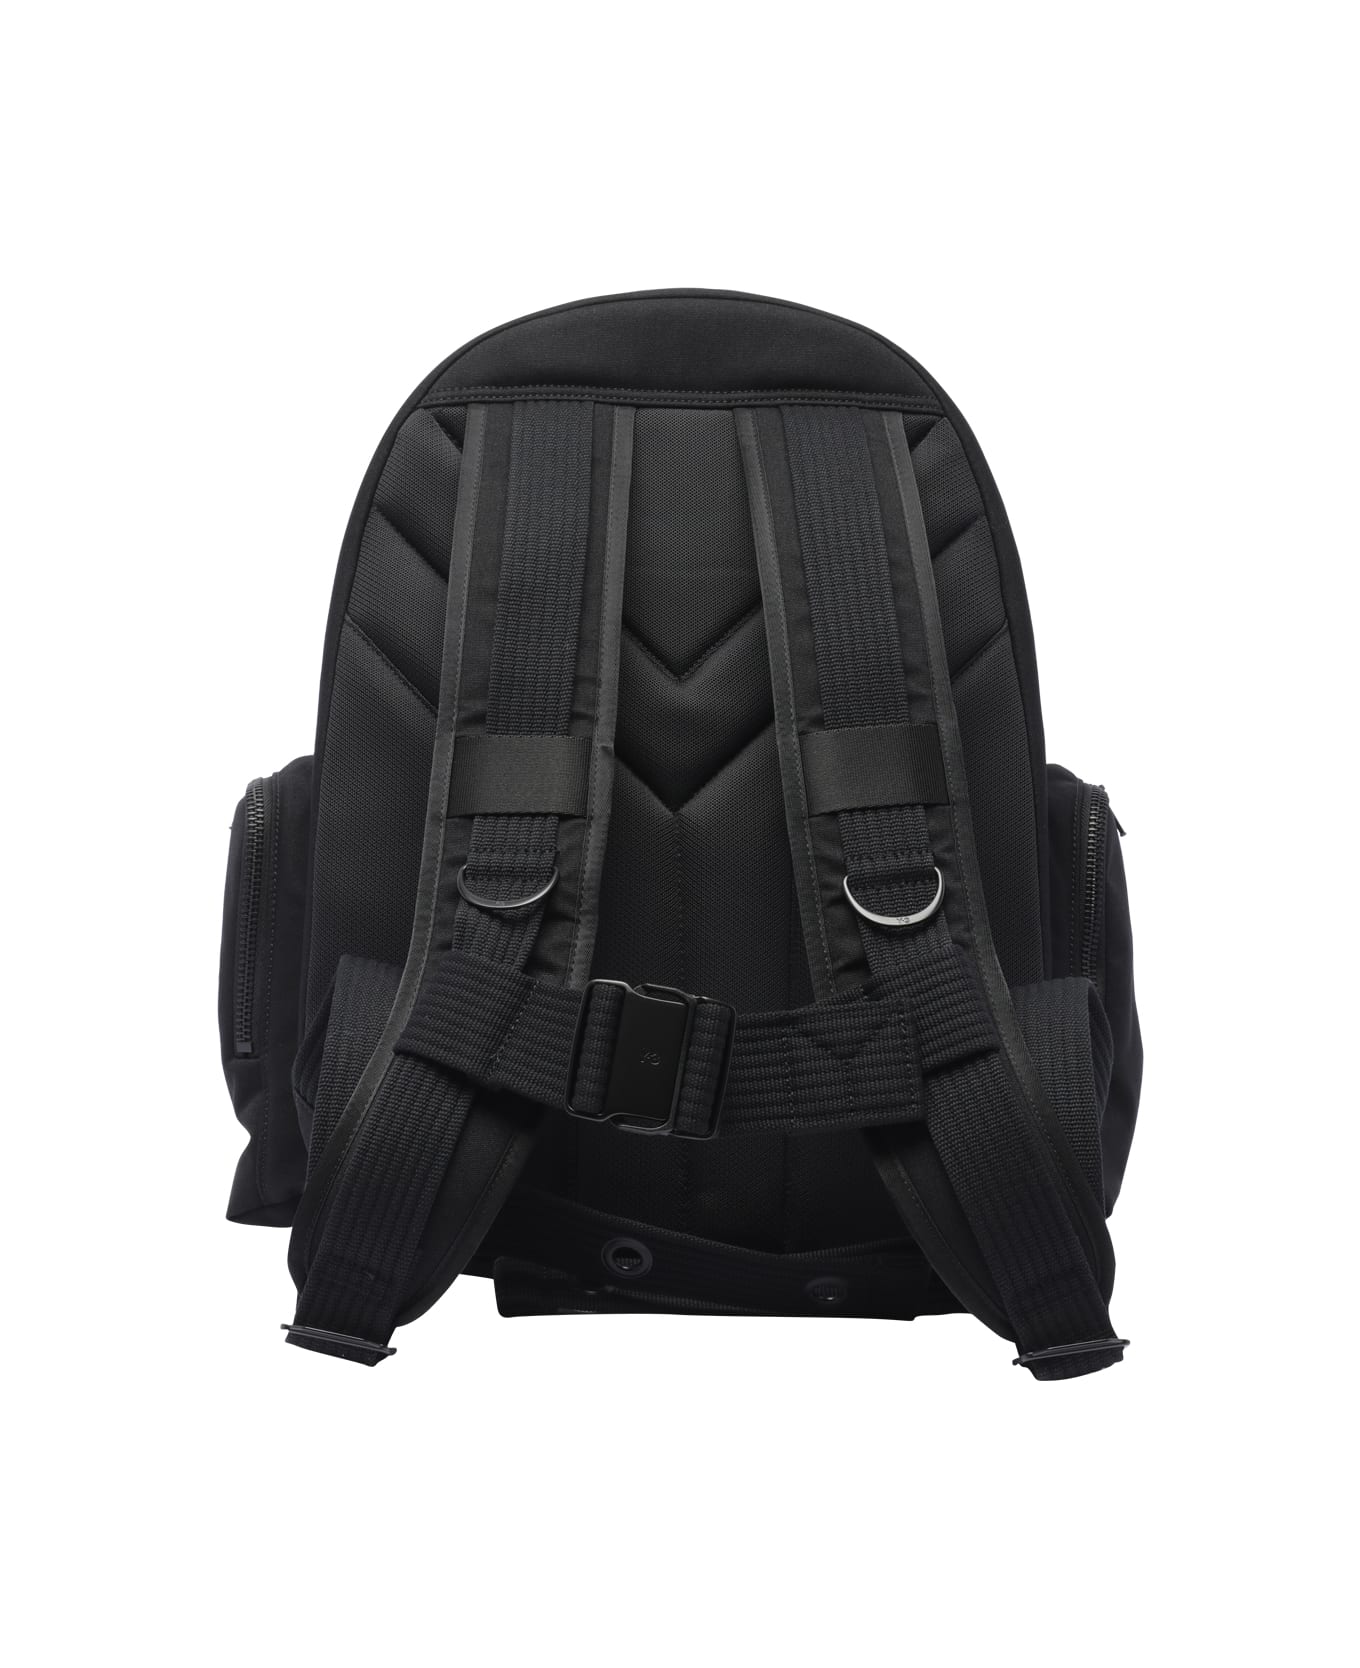 Y-3 Utility Backpack Backpack - BLACK